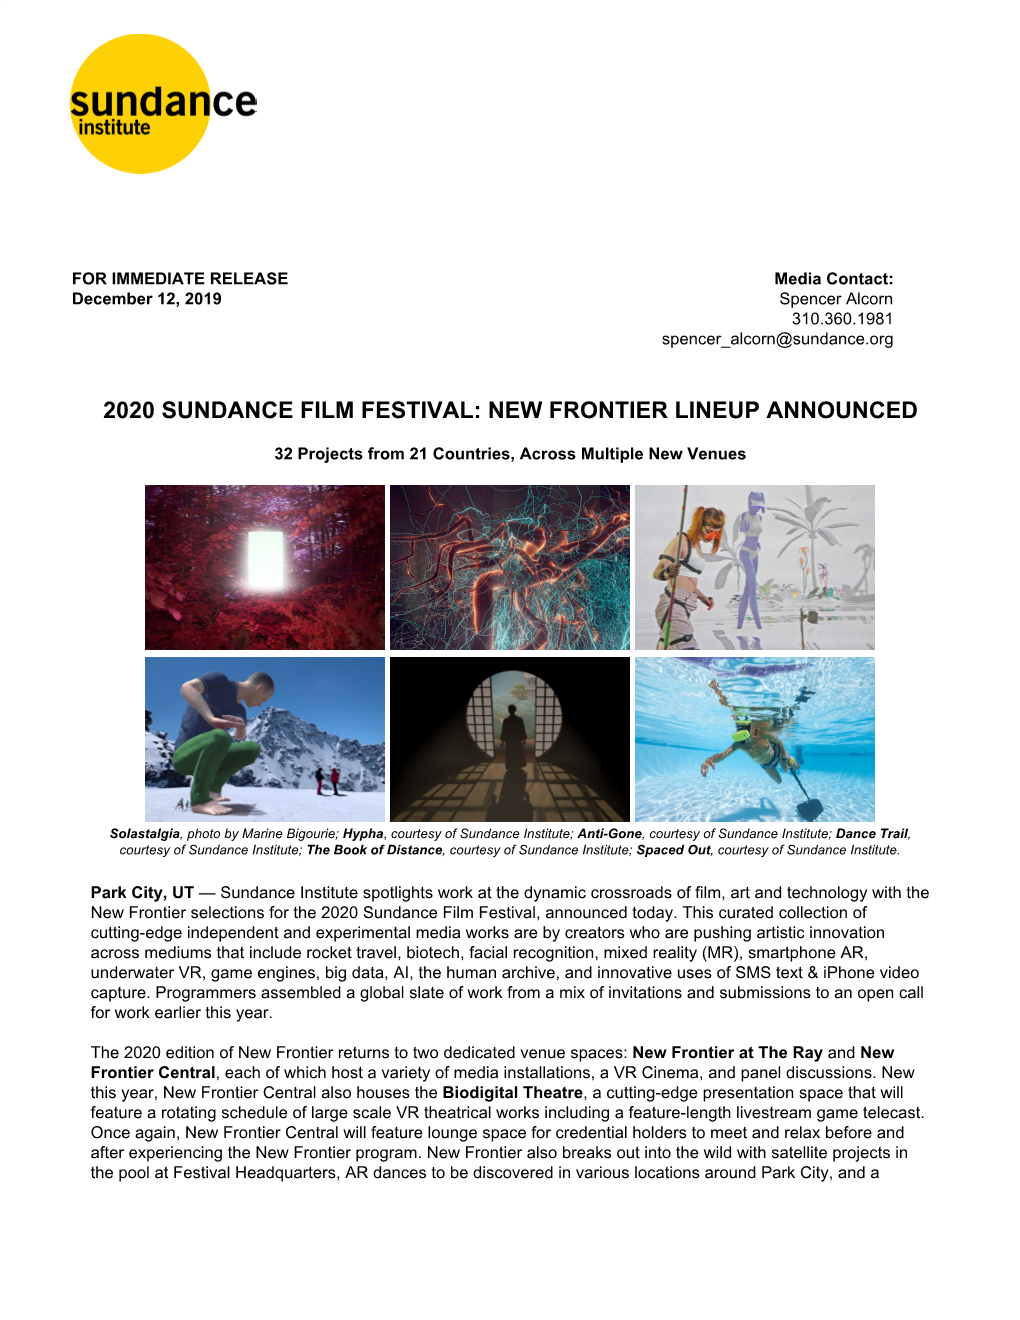 2020 Sundance Film Festival: New Frontier Lineup Announced